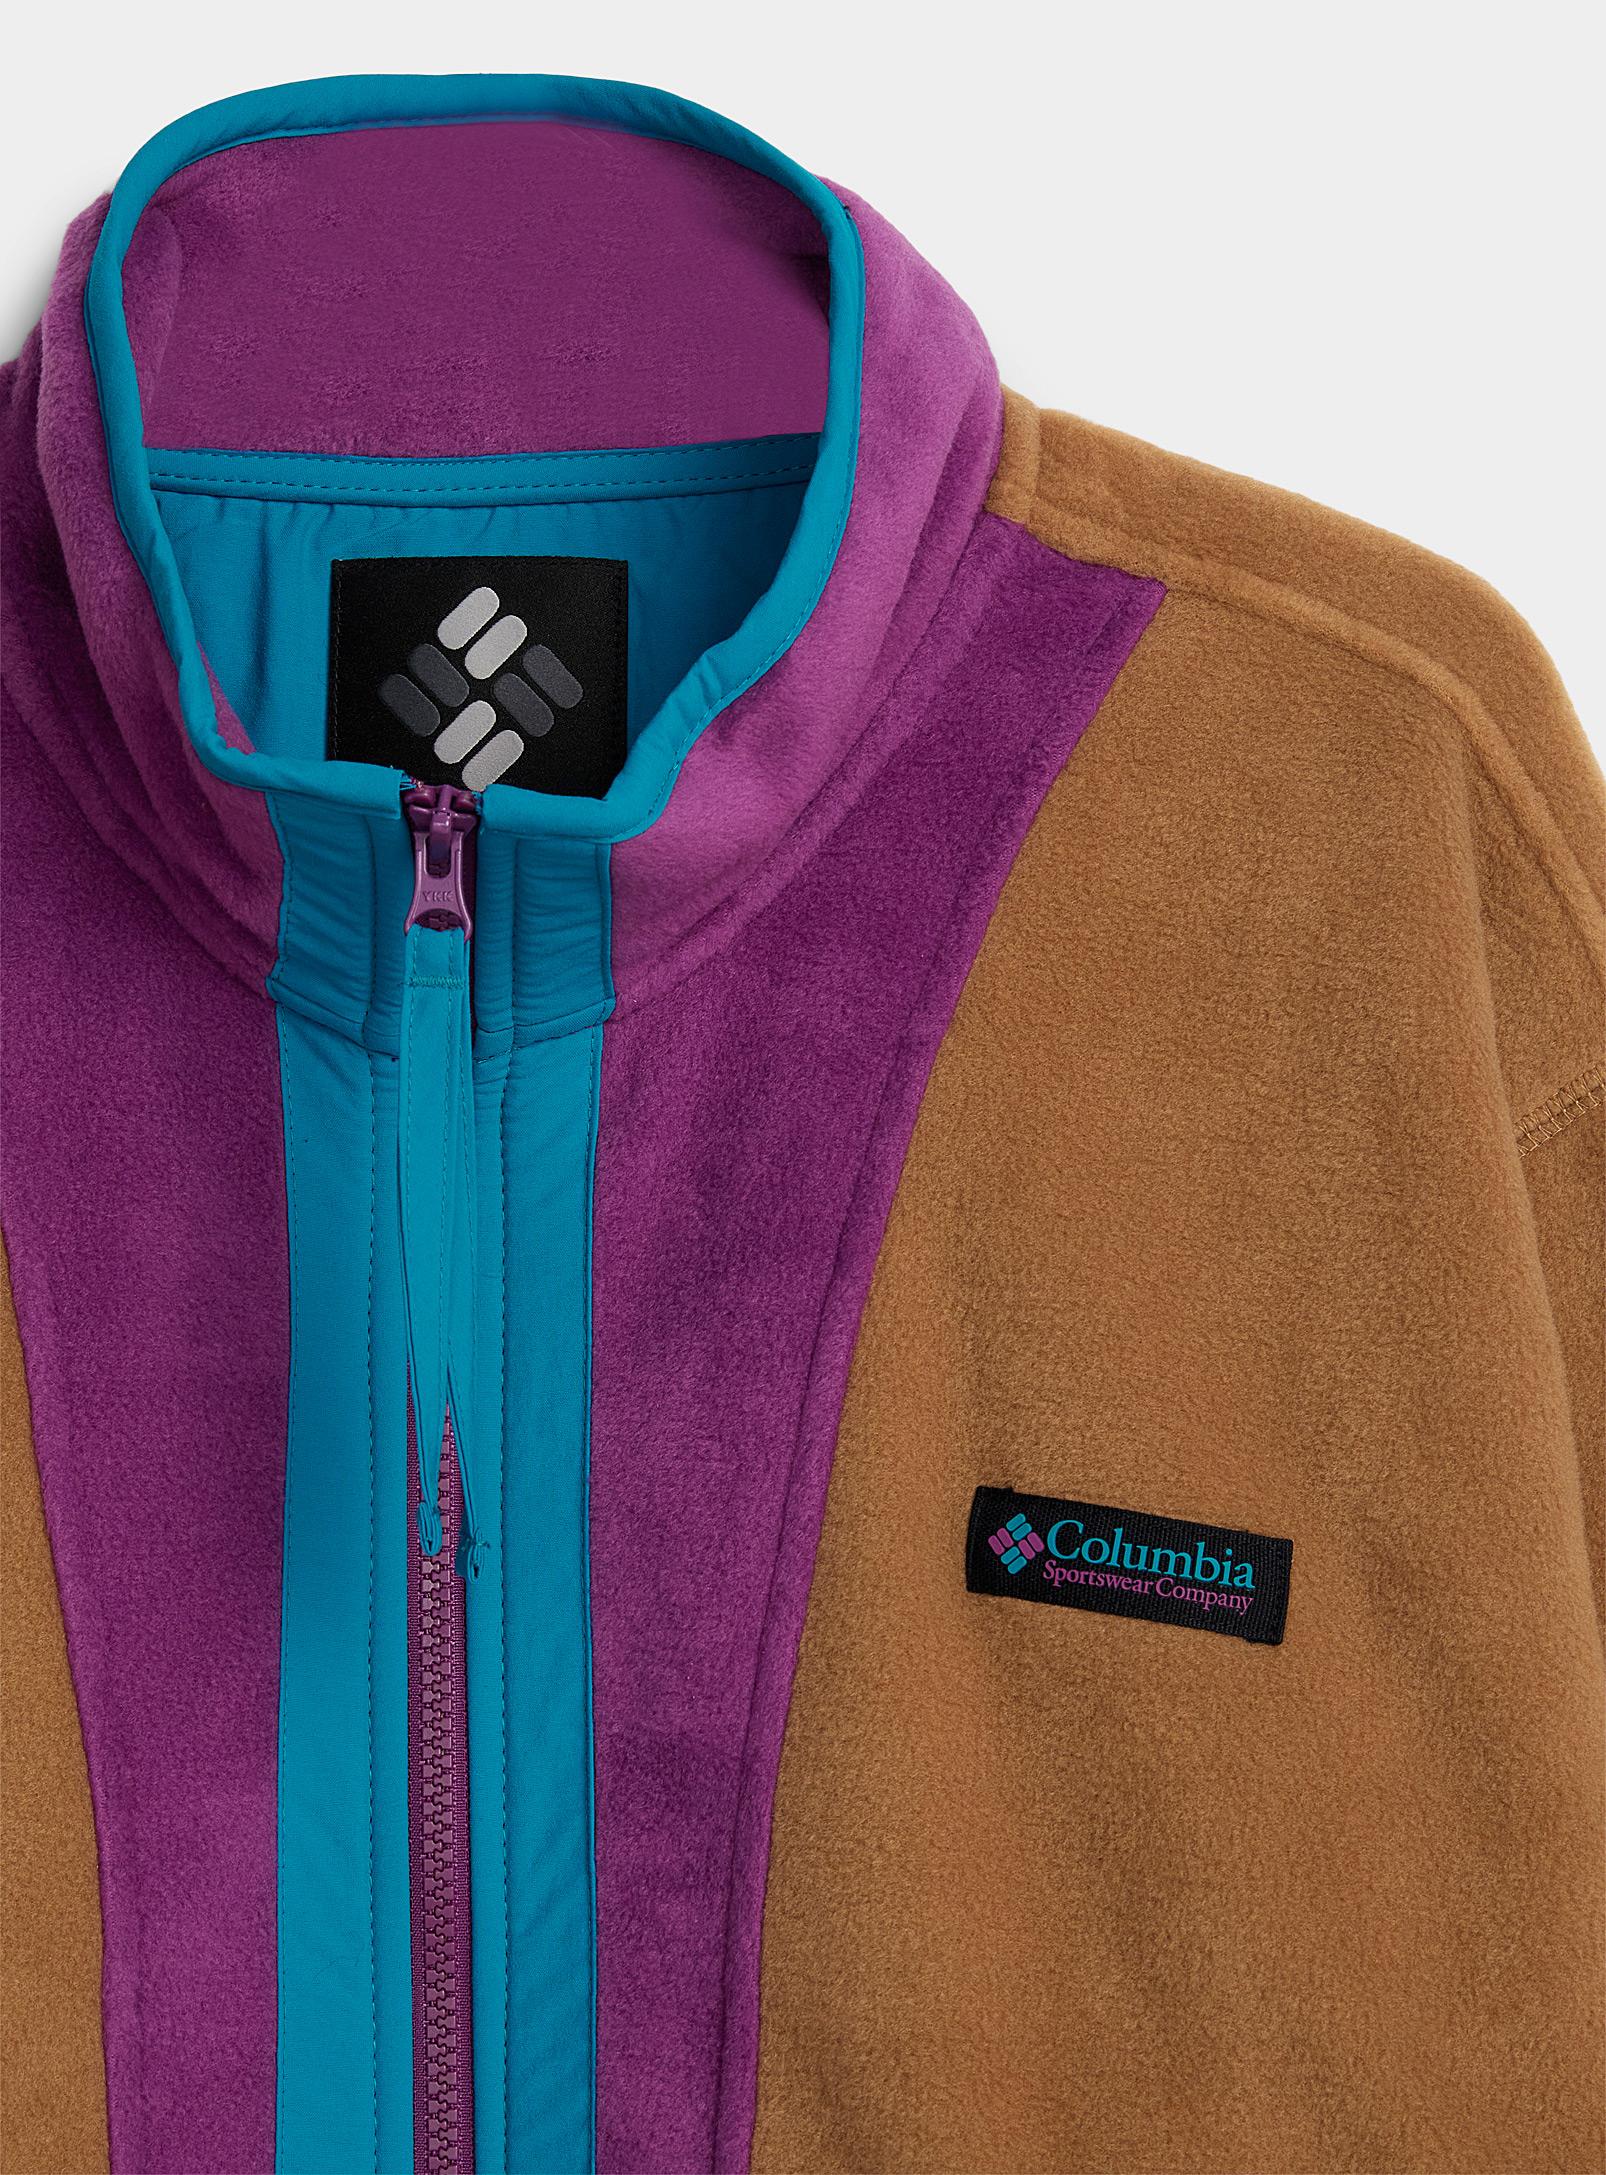 Columbia Retro Block Polar Fleece Jacket in Mauve (Purple) for Men - Lyst